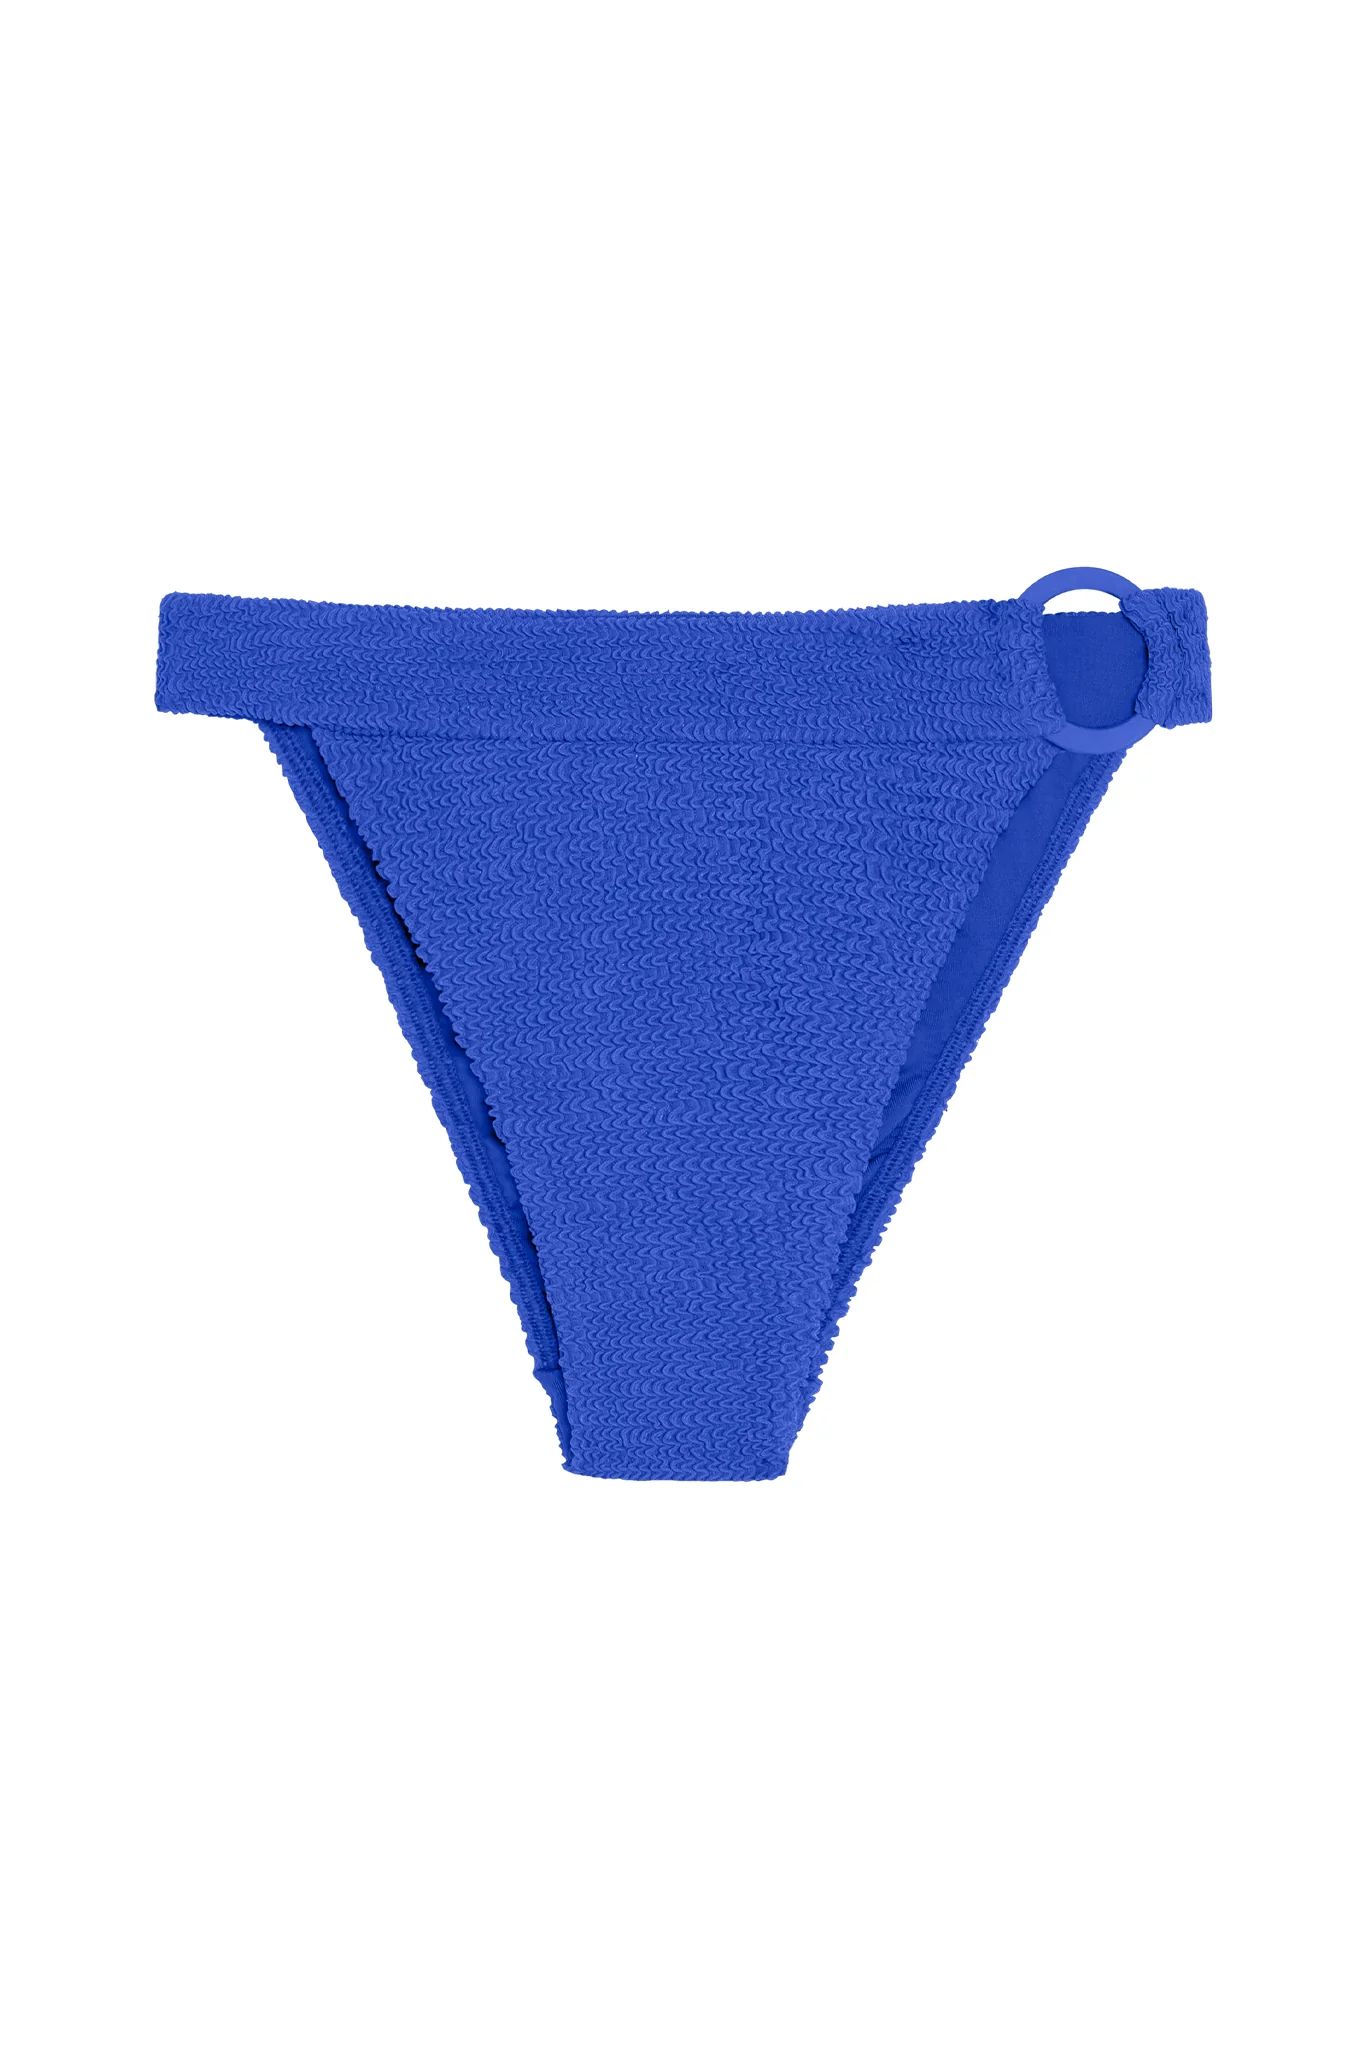 Antigua Bottom - Cobalt Crinkle | Monday Swimwear